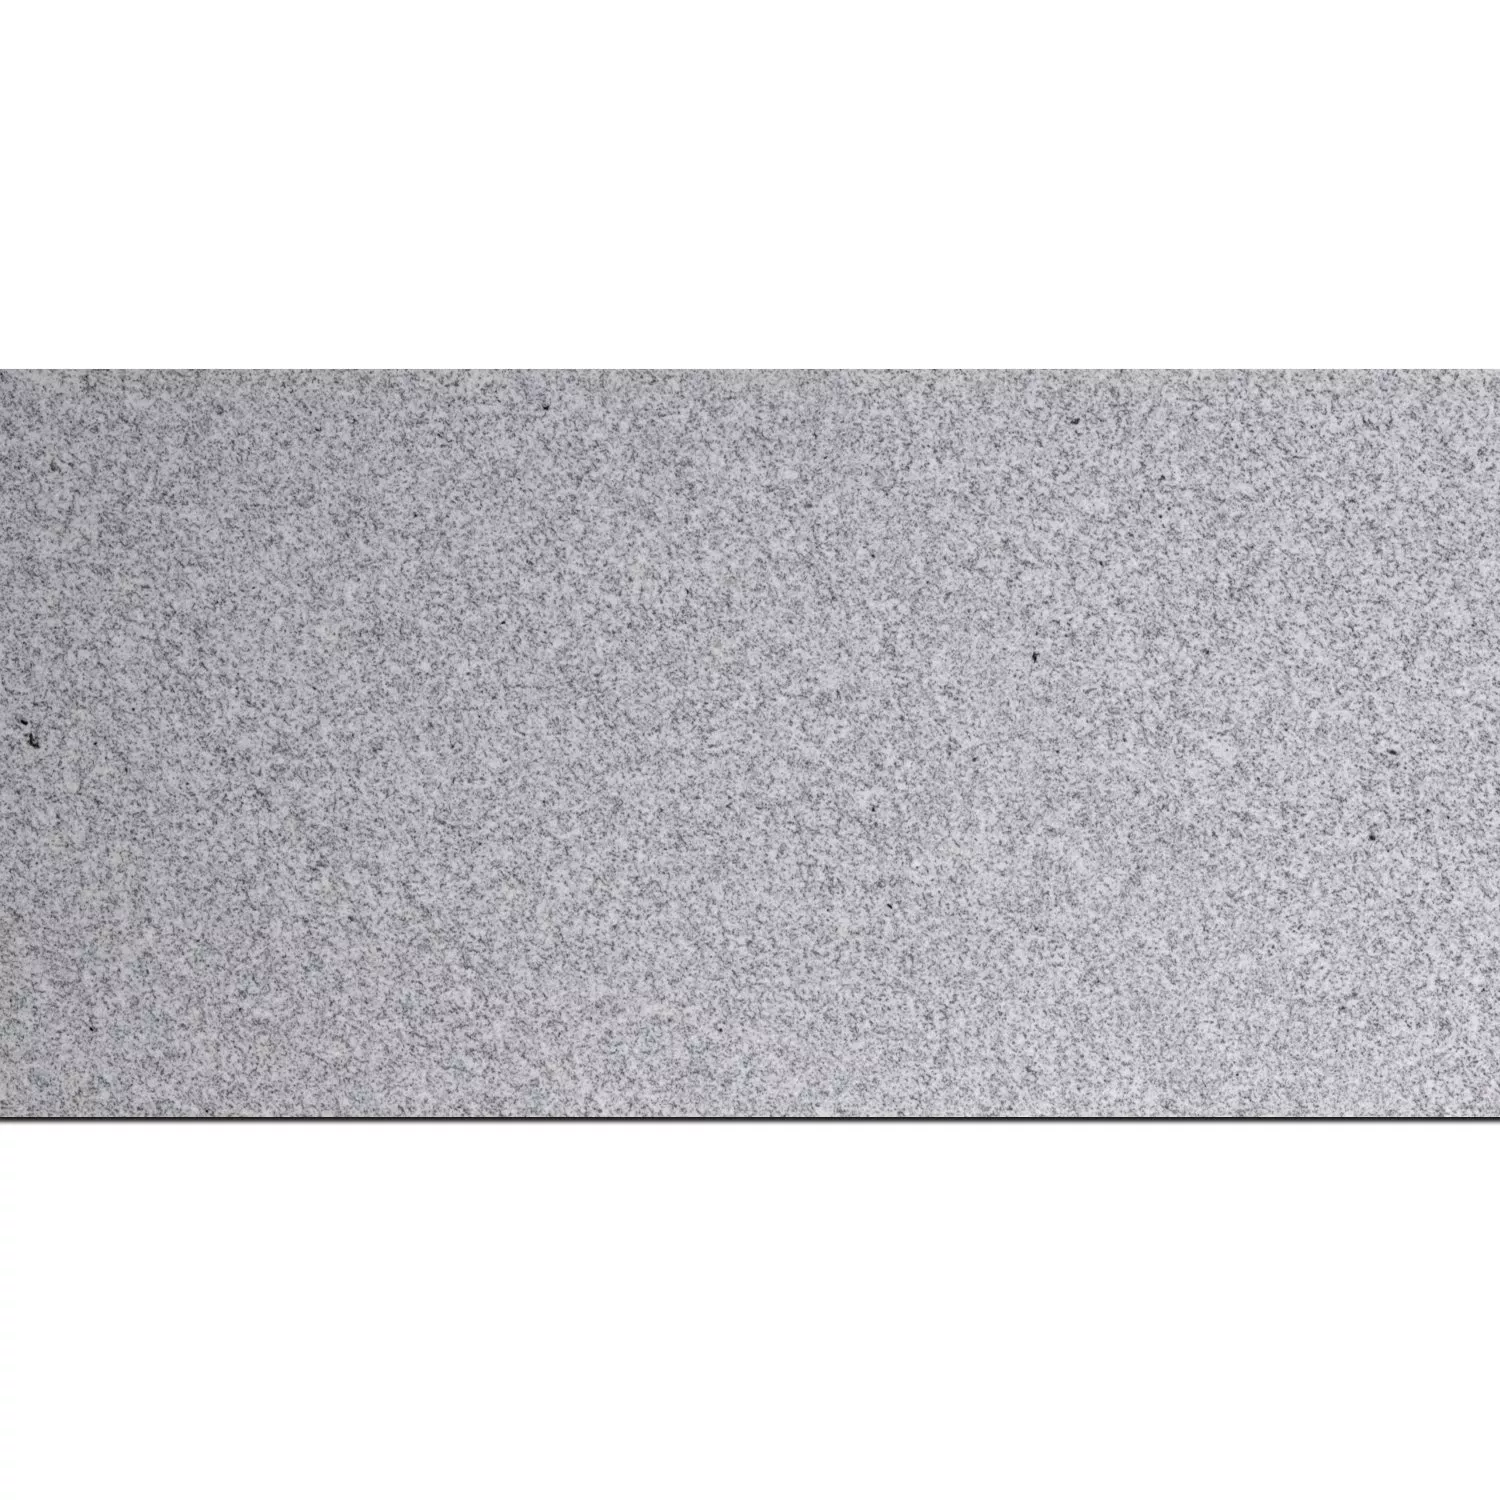 Natural Stone Tiles Granite Padang Light Polished 30,5x61cm